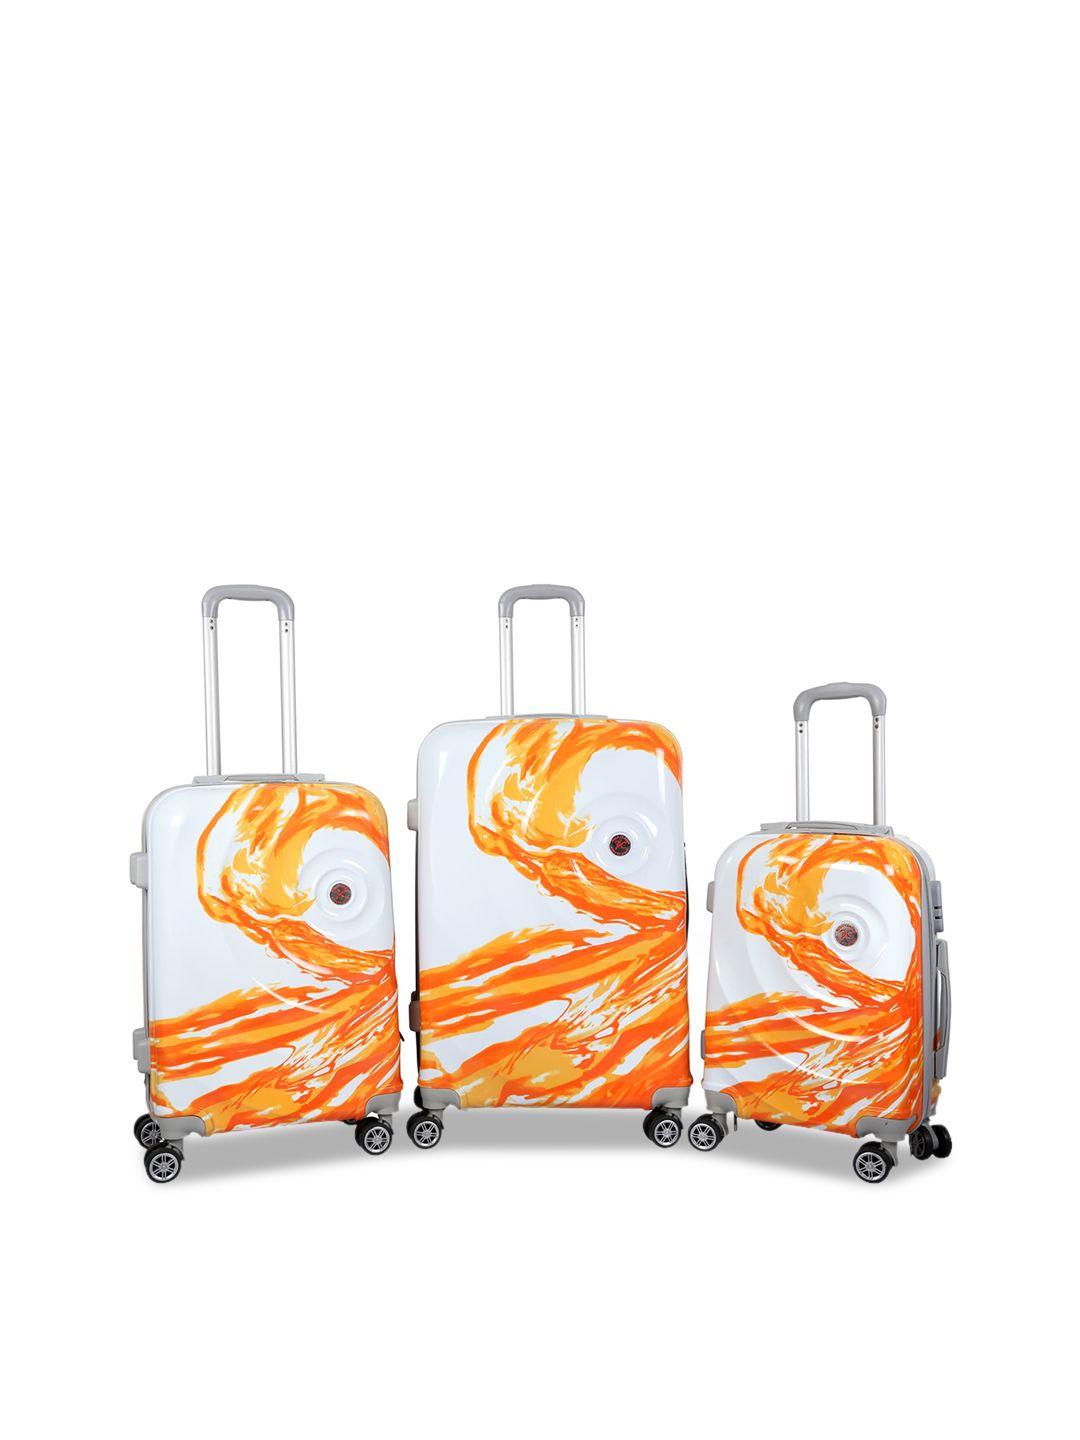 polo class unisex set of 3 orange & white printed hard luggage trolley bags